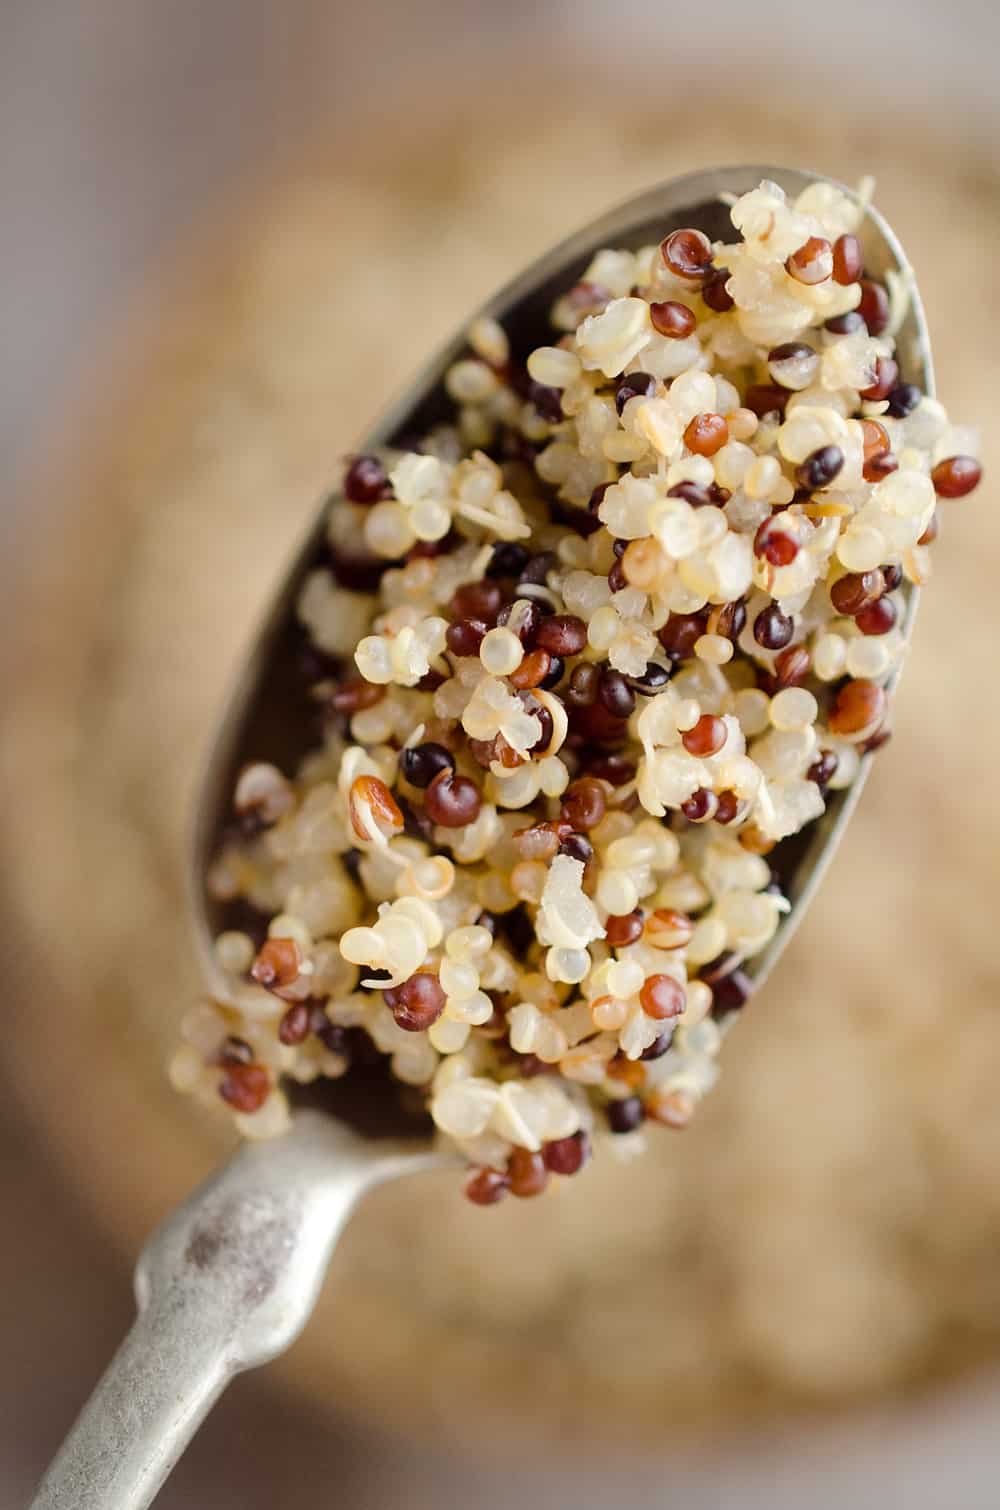 https://www.thecreativebite.com/wp-content/uploads/2017/04/Easiest-Fluffy-Quinoa-Recipe-Pressure-Cooker-The-Creative-Bite-2-copy.jpg